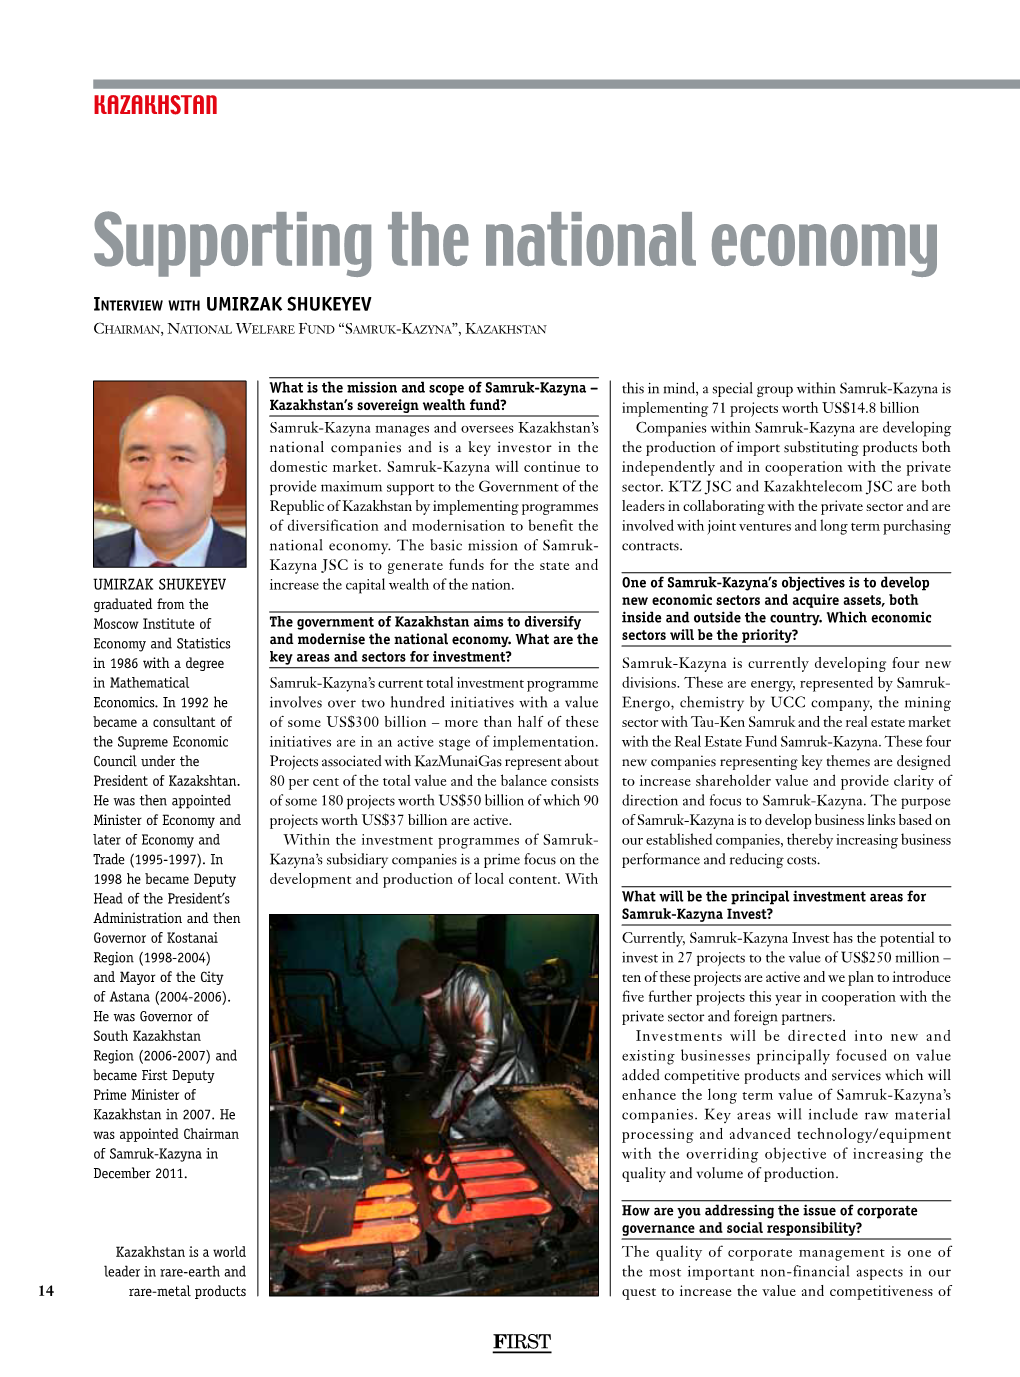 Supporting the National Economy Interview with Umirzak Shukeyev Chairman, National Welfare Fund “Samruk-Kazyna”, Kazakhstan